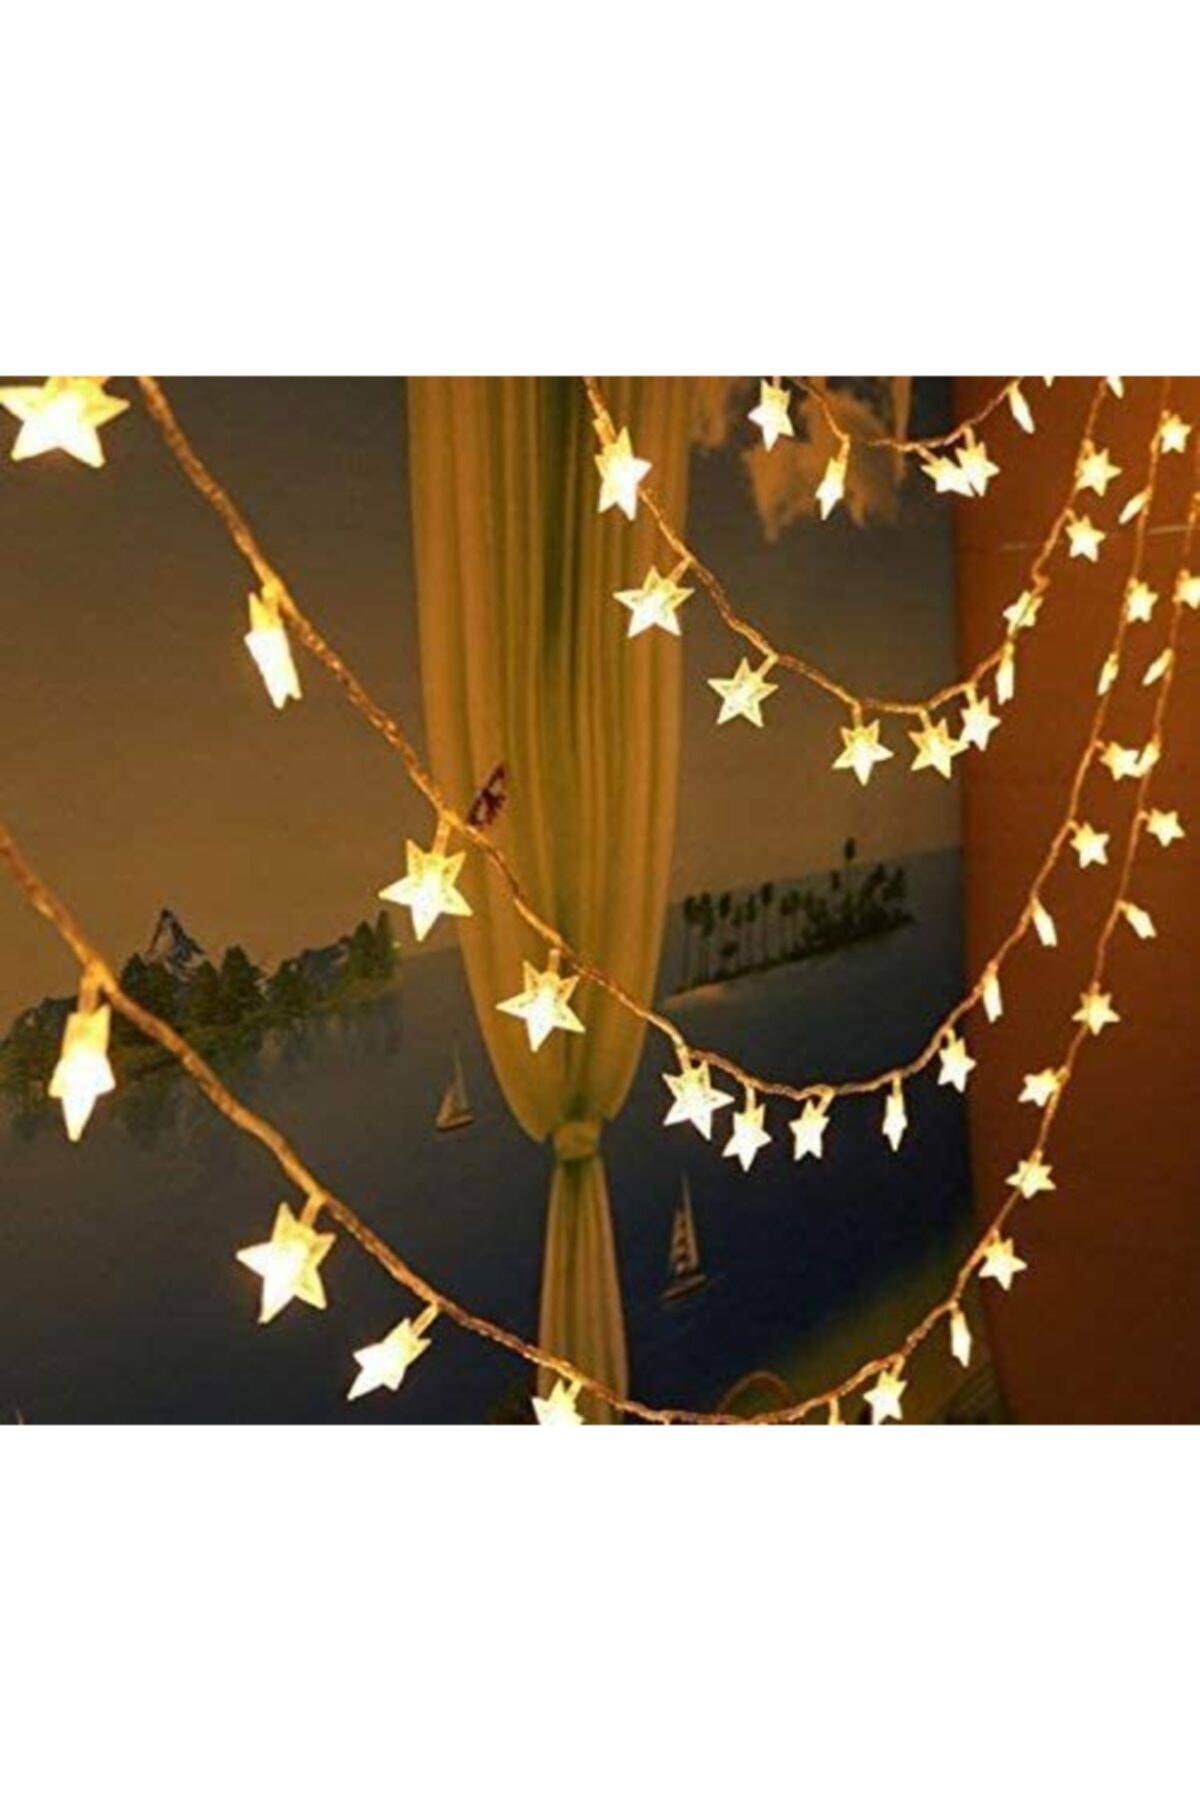 2 Meter Decoratieve Ster Led Rope Light-Star Star Led Licht Ornament Met Plug, Sterren Led, home Decor, Voor Vrouwen, Voor Kerst